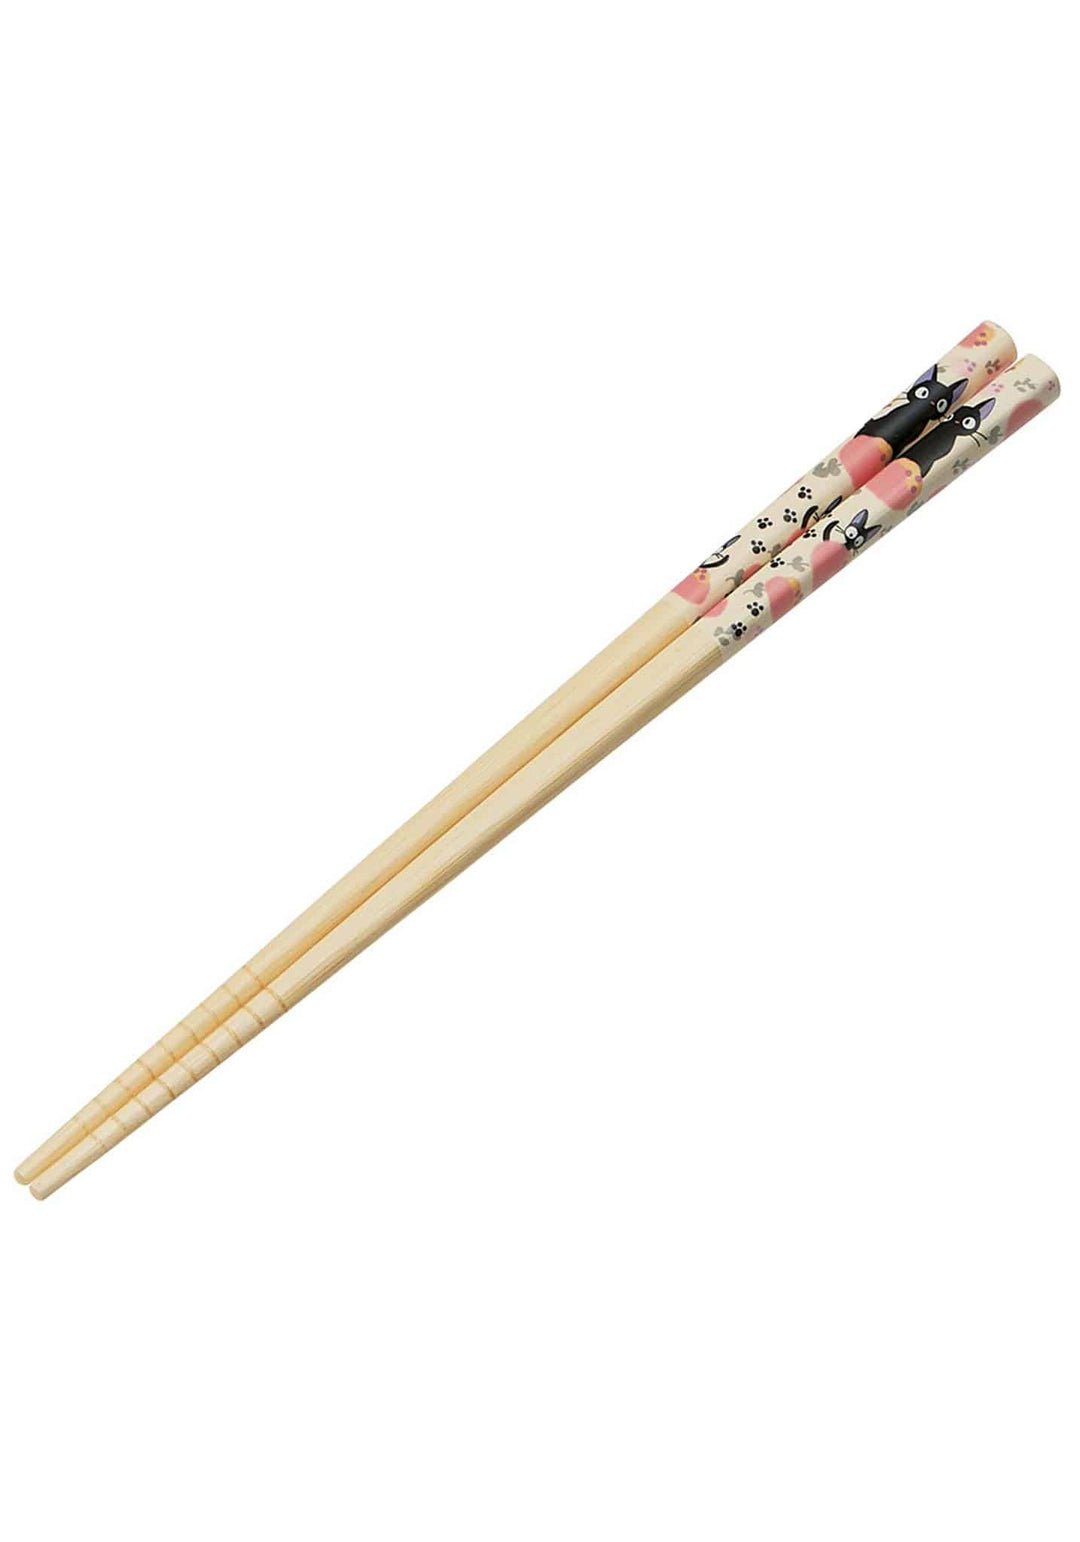 Kiki’s Delivery Service Bamboo Chopsticks (Footprints)